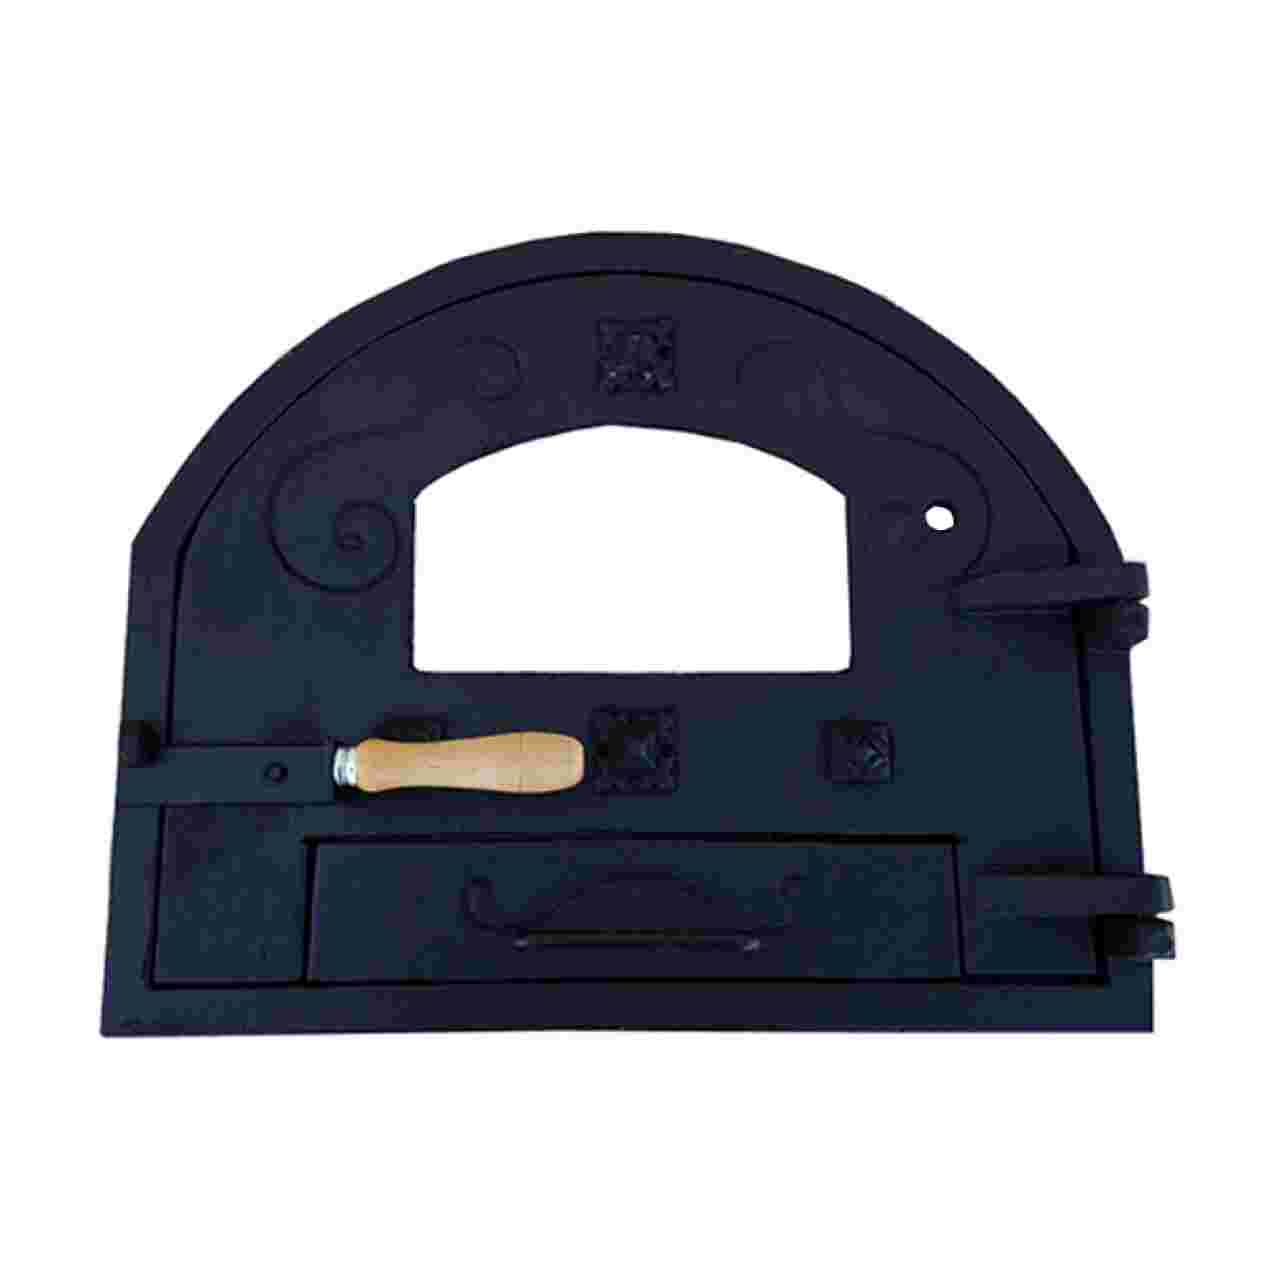 Puerta para horno de leña de Fundición con cristal - Sistema anti-humos  patentado